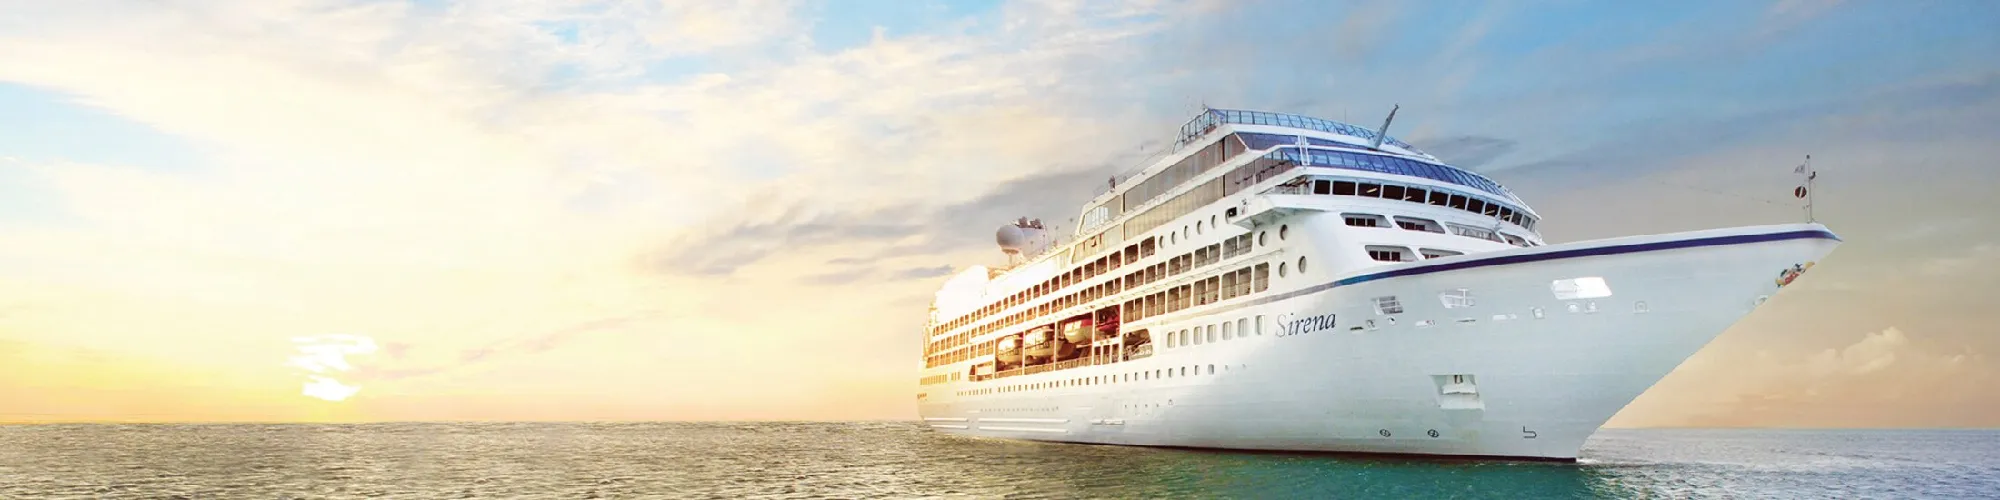 Oceania Cruises Kreuzfahrten background image